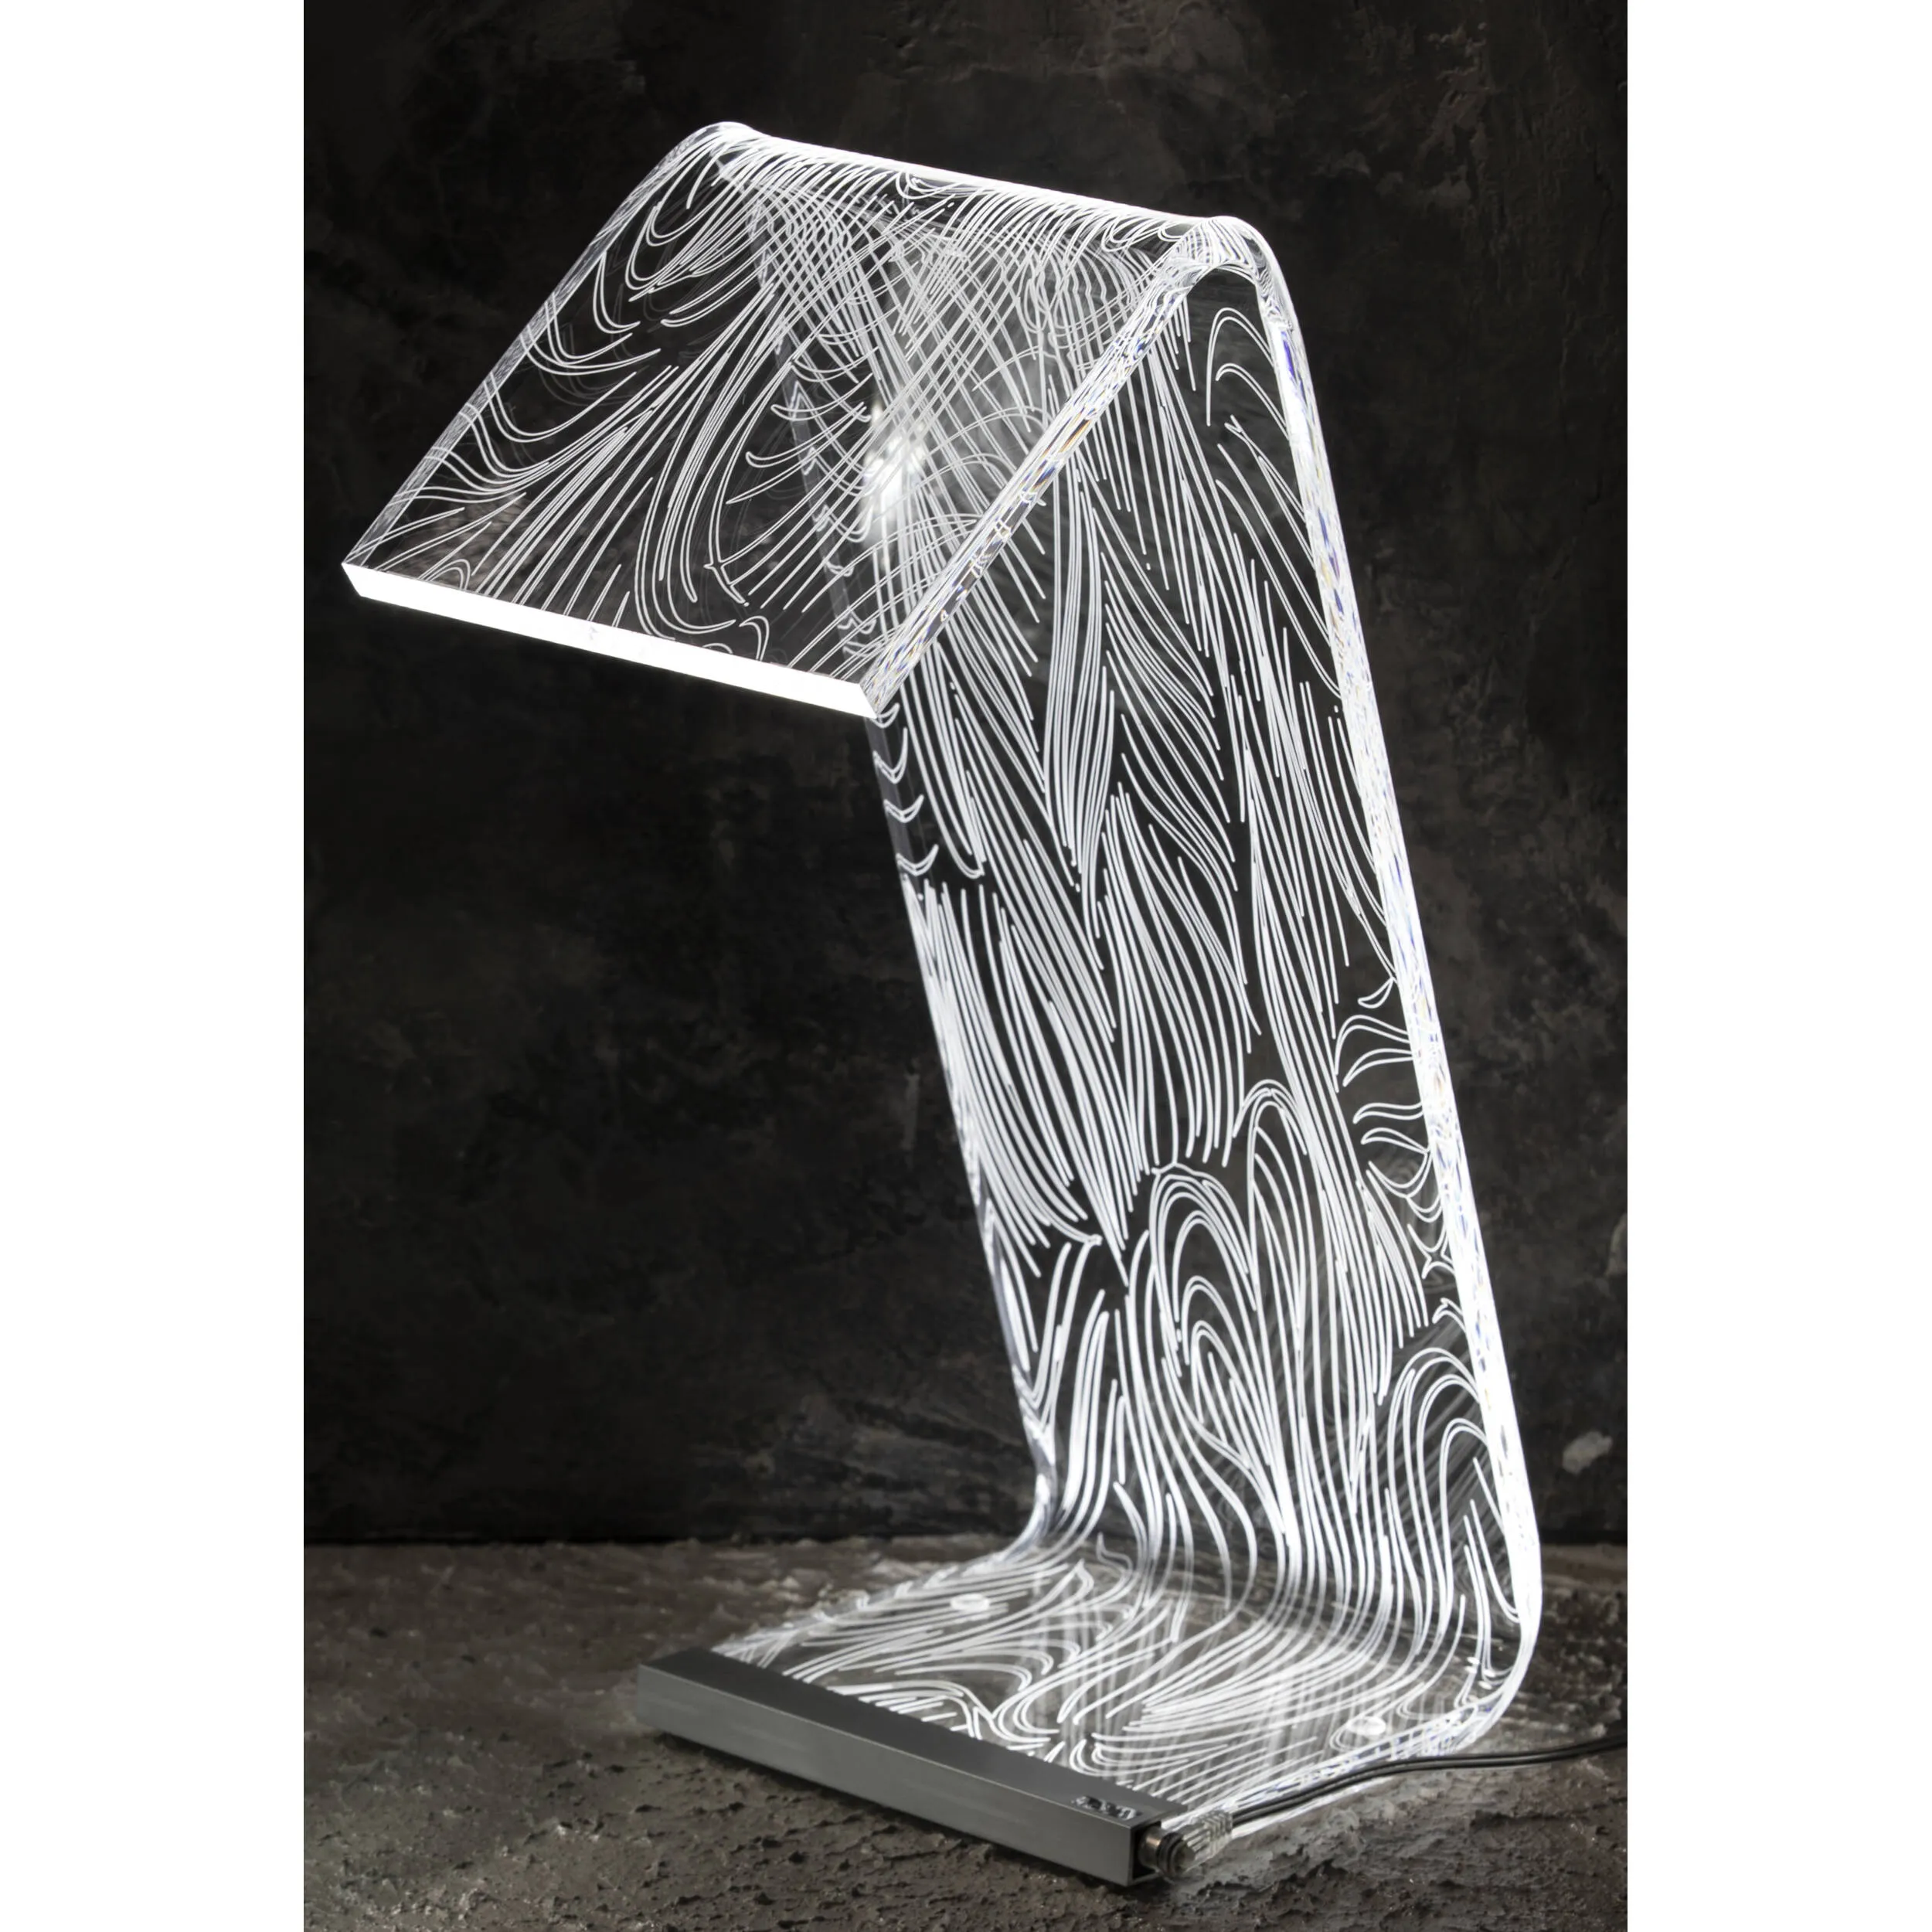 lampada tavolo c led MEDIA PIUMA , dimensioni 13,5x24xH34 cm, peso 1,28 kg, spessore 10 mm